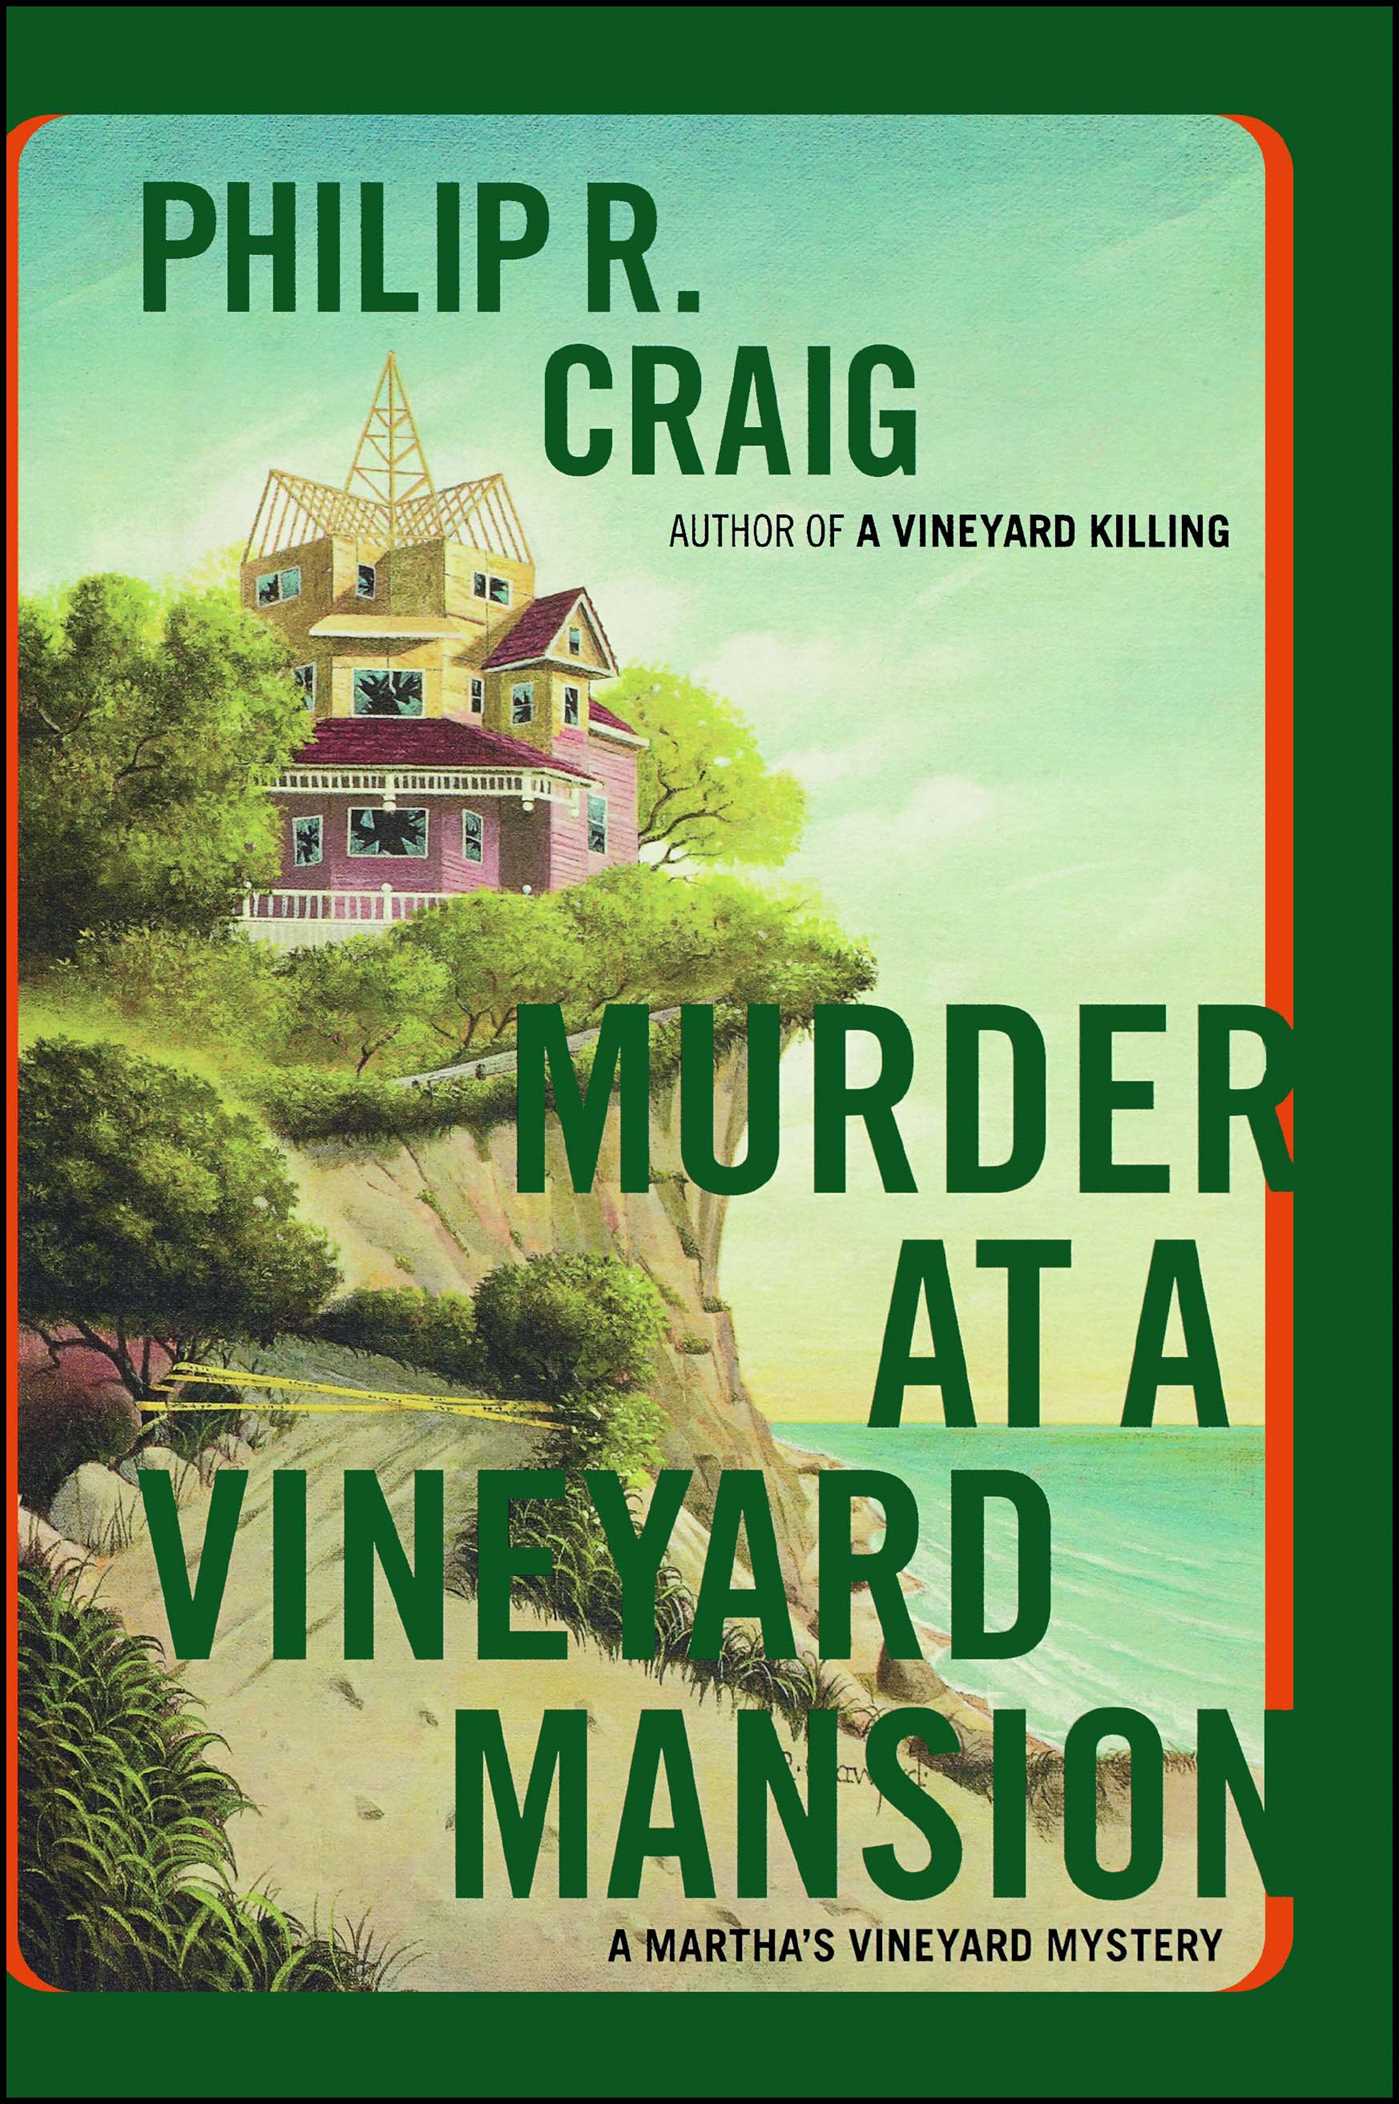 Image for "Murder at a Vineyard Mansion"